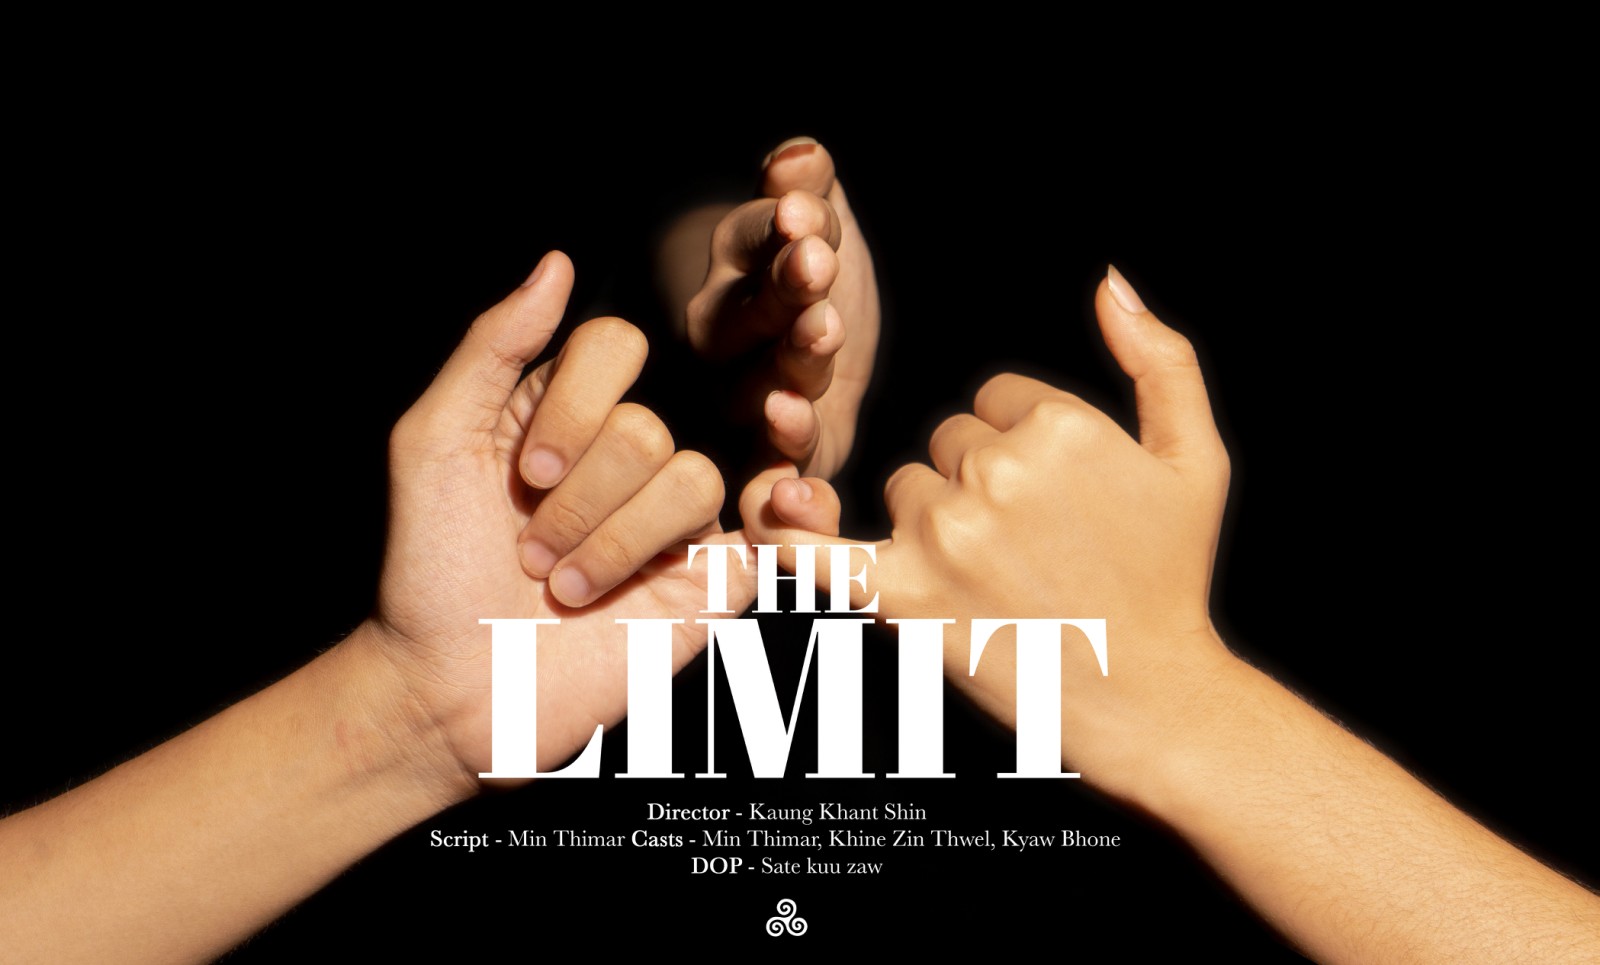 The Limit (episode - 3)